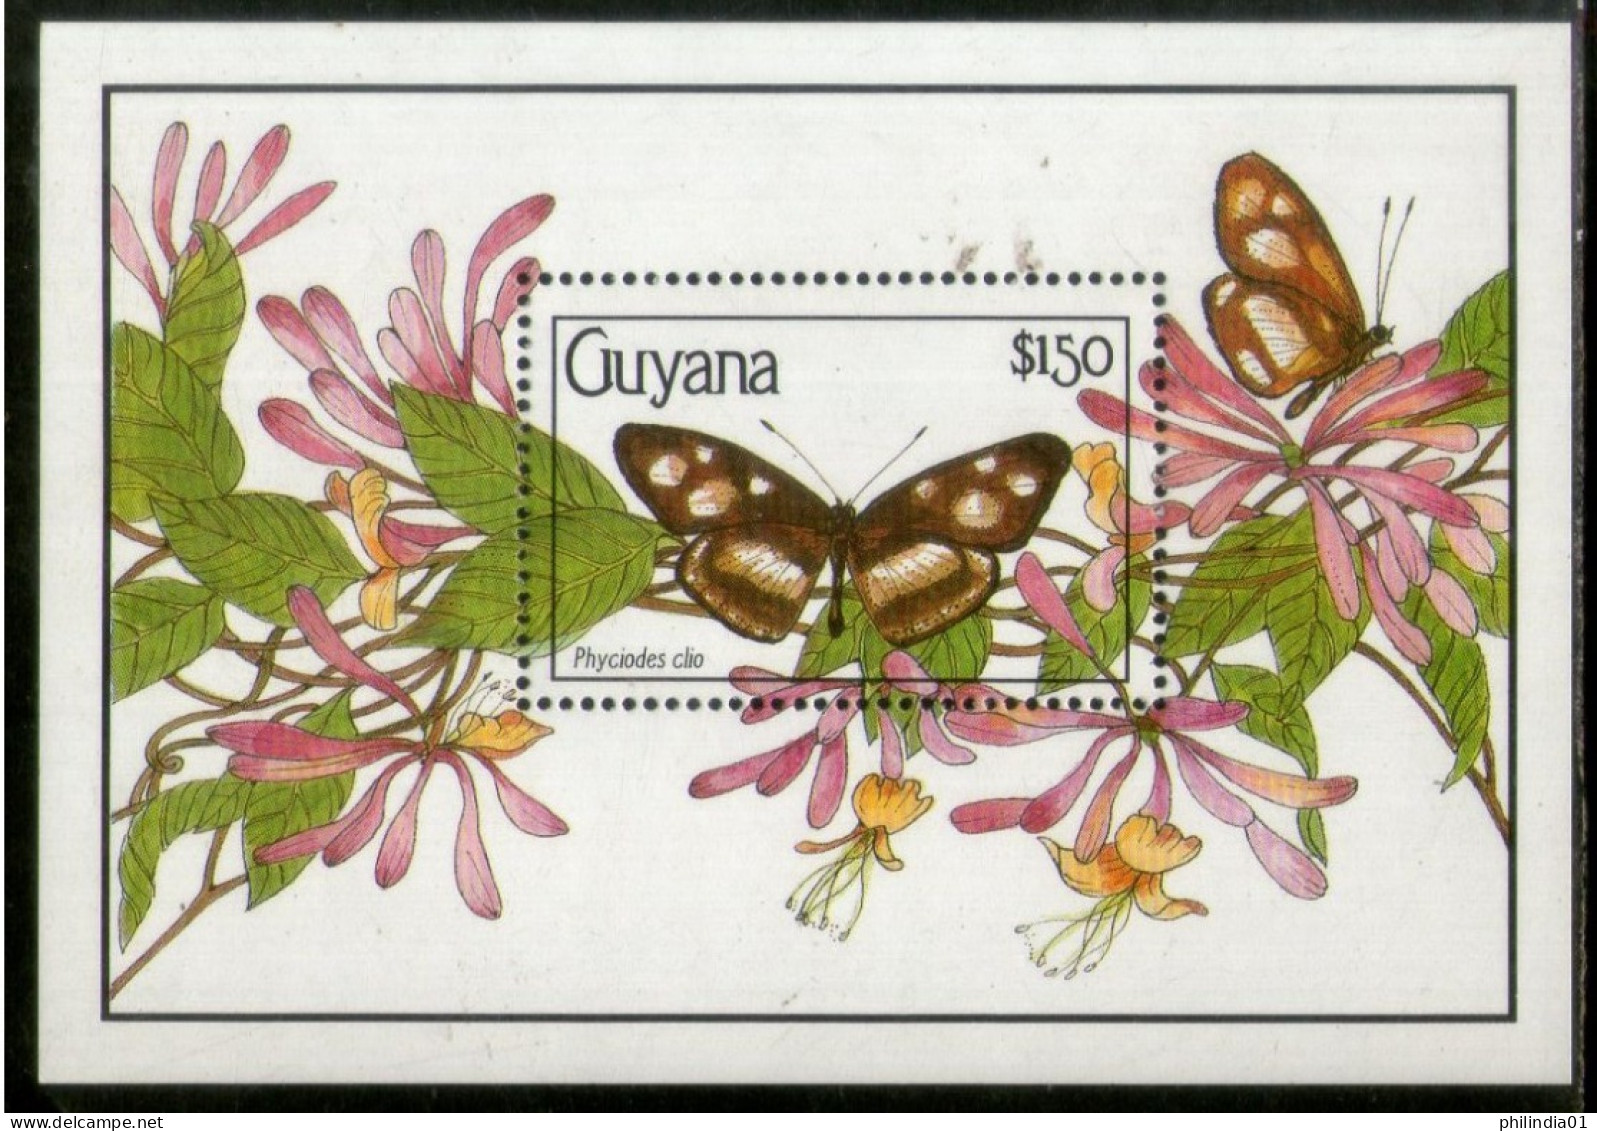 Guyana 1990 Butterflies Moth Insect Sc 2345 M/s MNH # 1860 - Mariposas